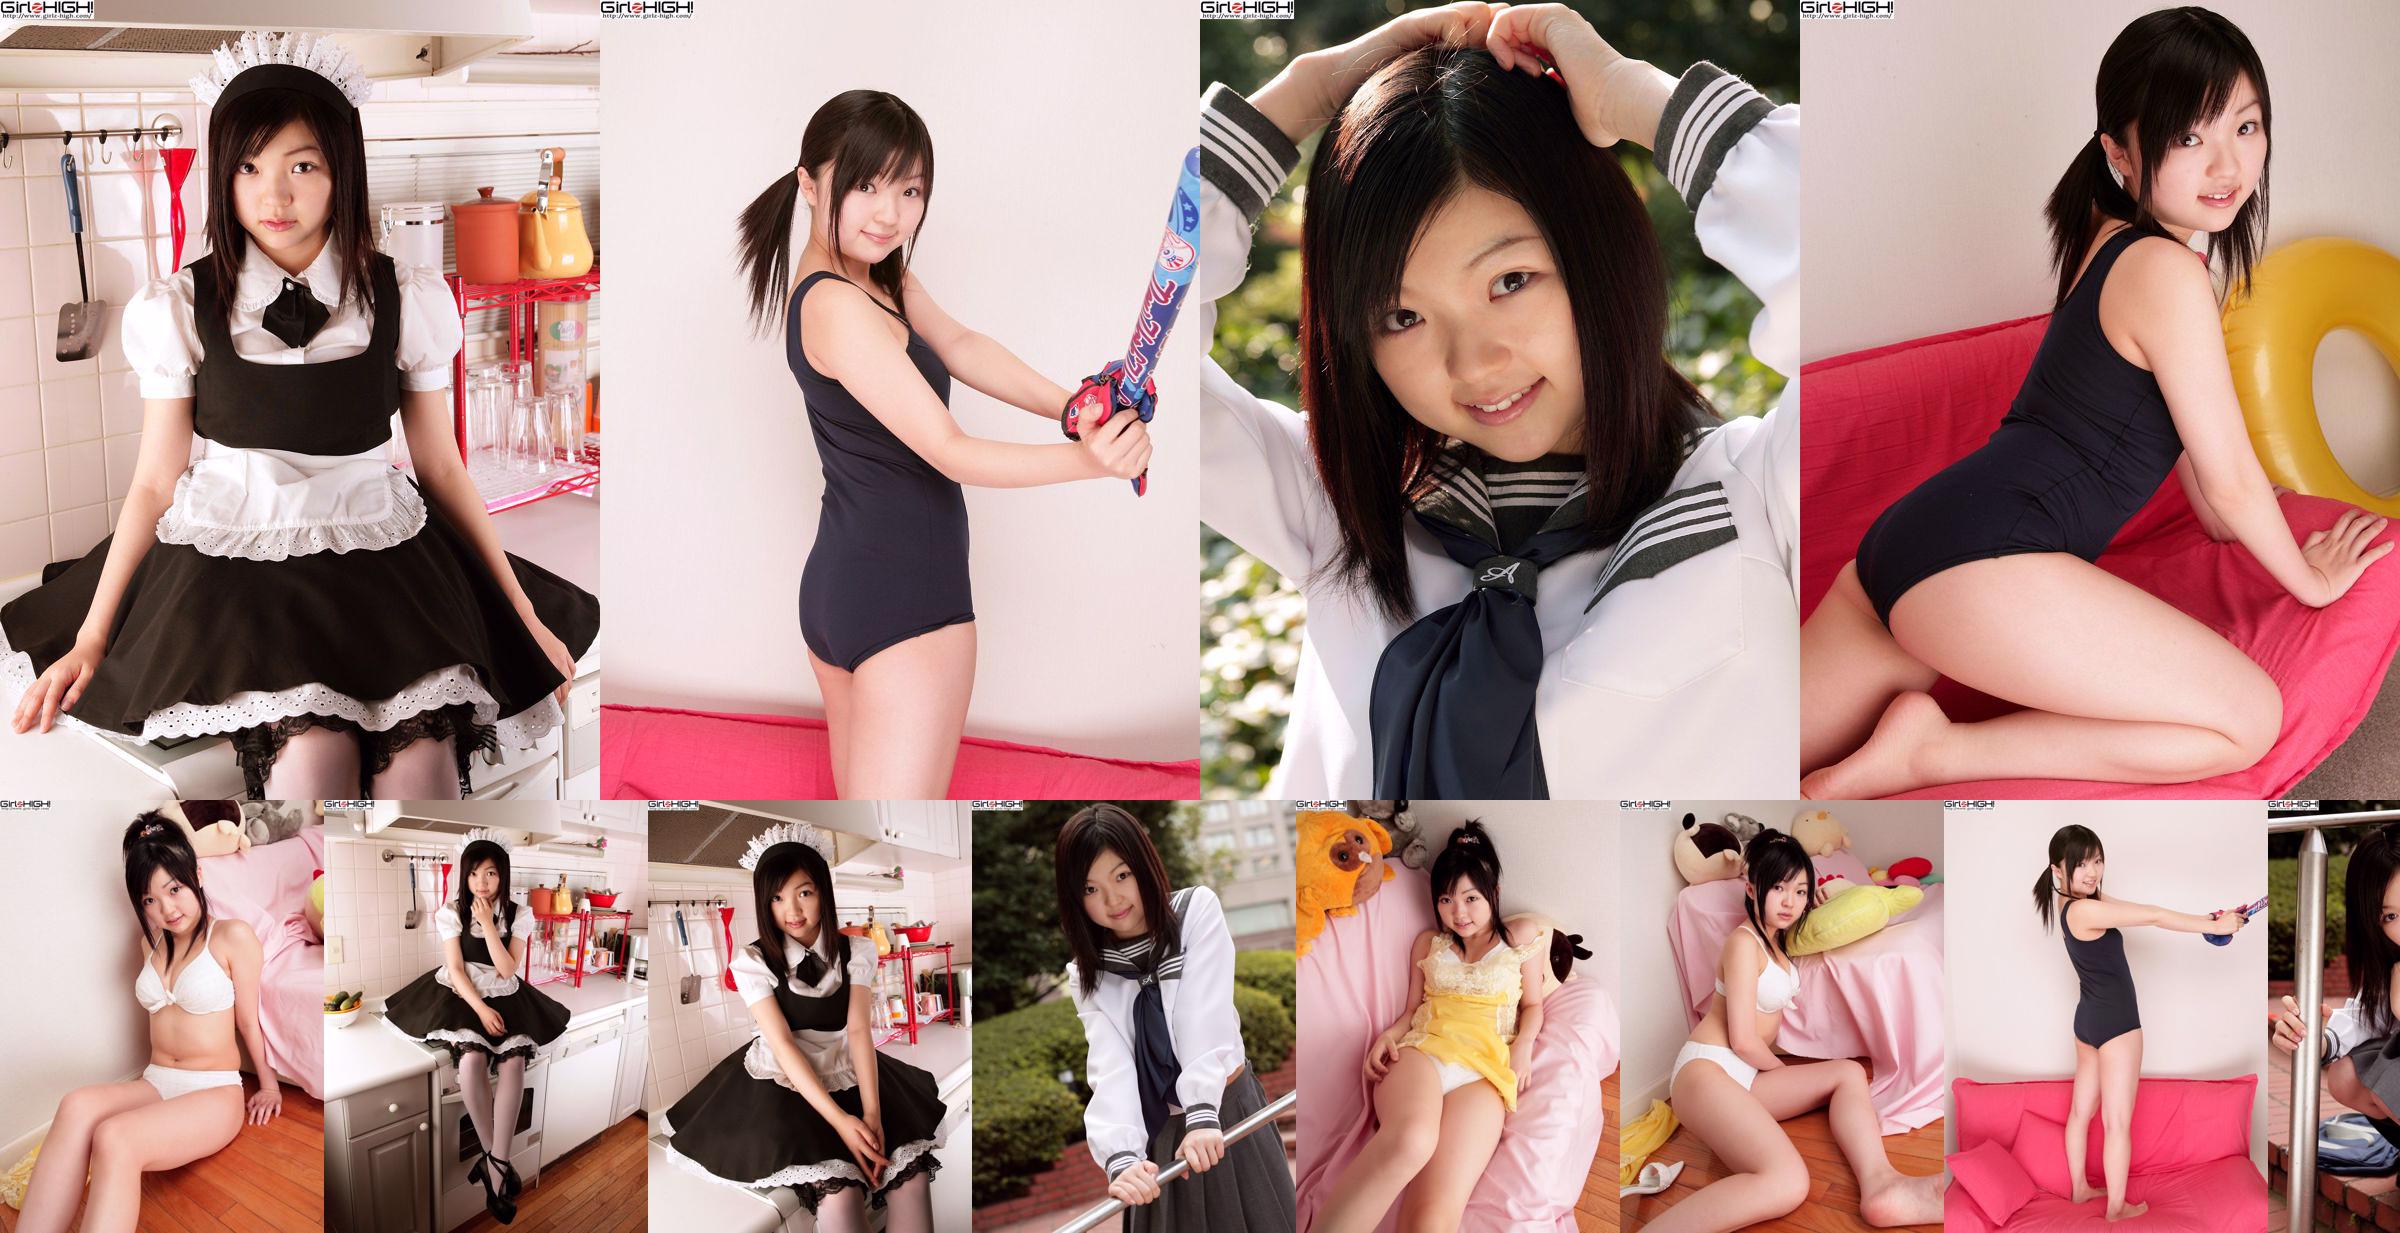 [Girlz-High] Misaki Moe Gravure Gallery-g074 Photoset 03 No.c0372f Page 1